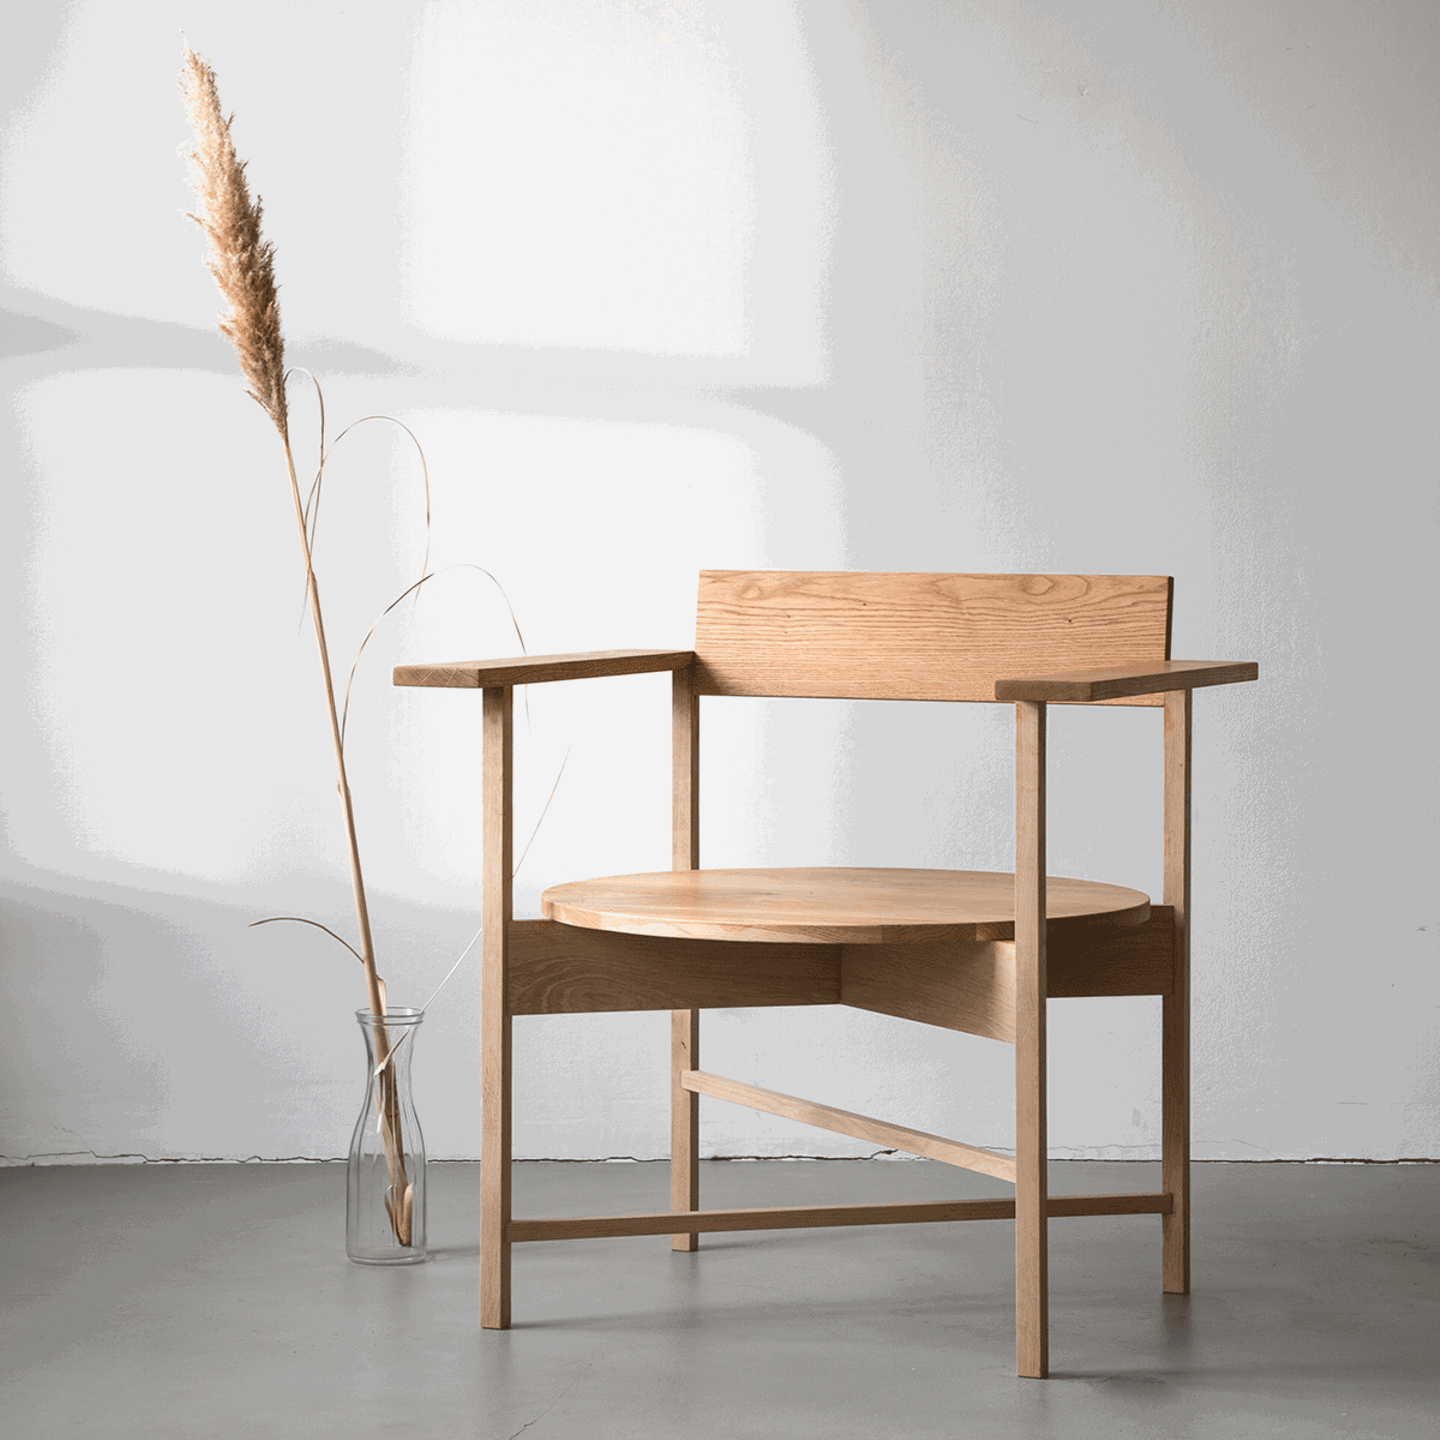 Sessel "Oak Arm Chair" von Nutsandwoods aus massivem Eichenholz